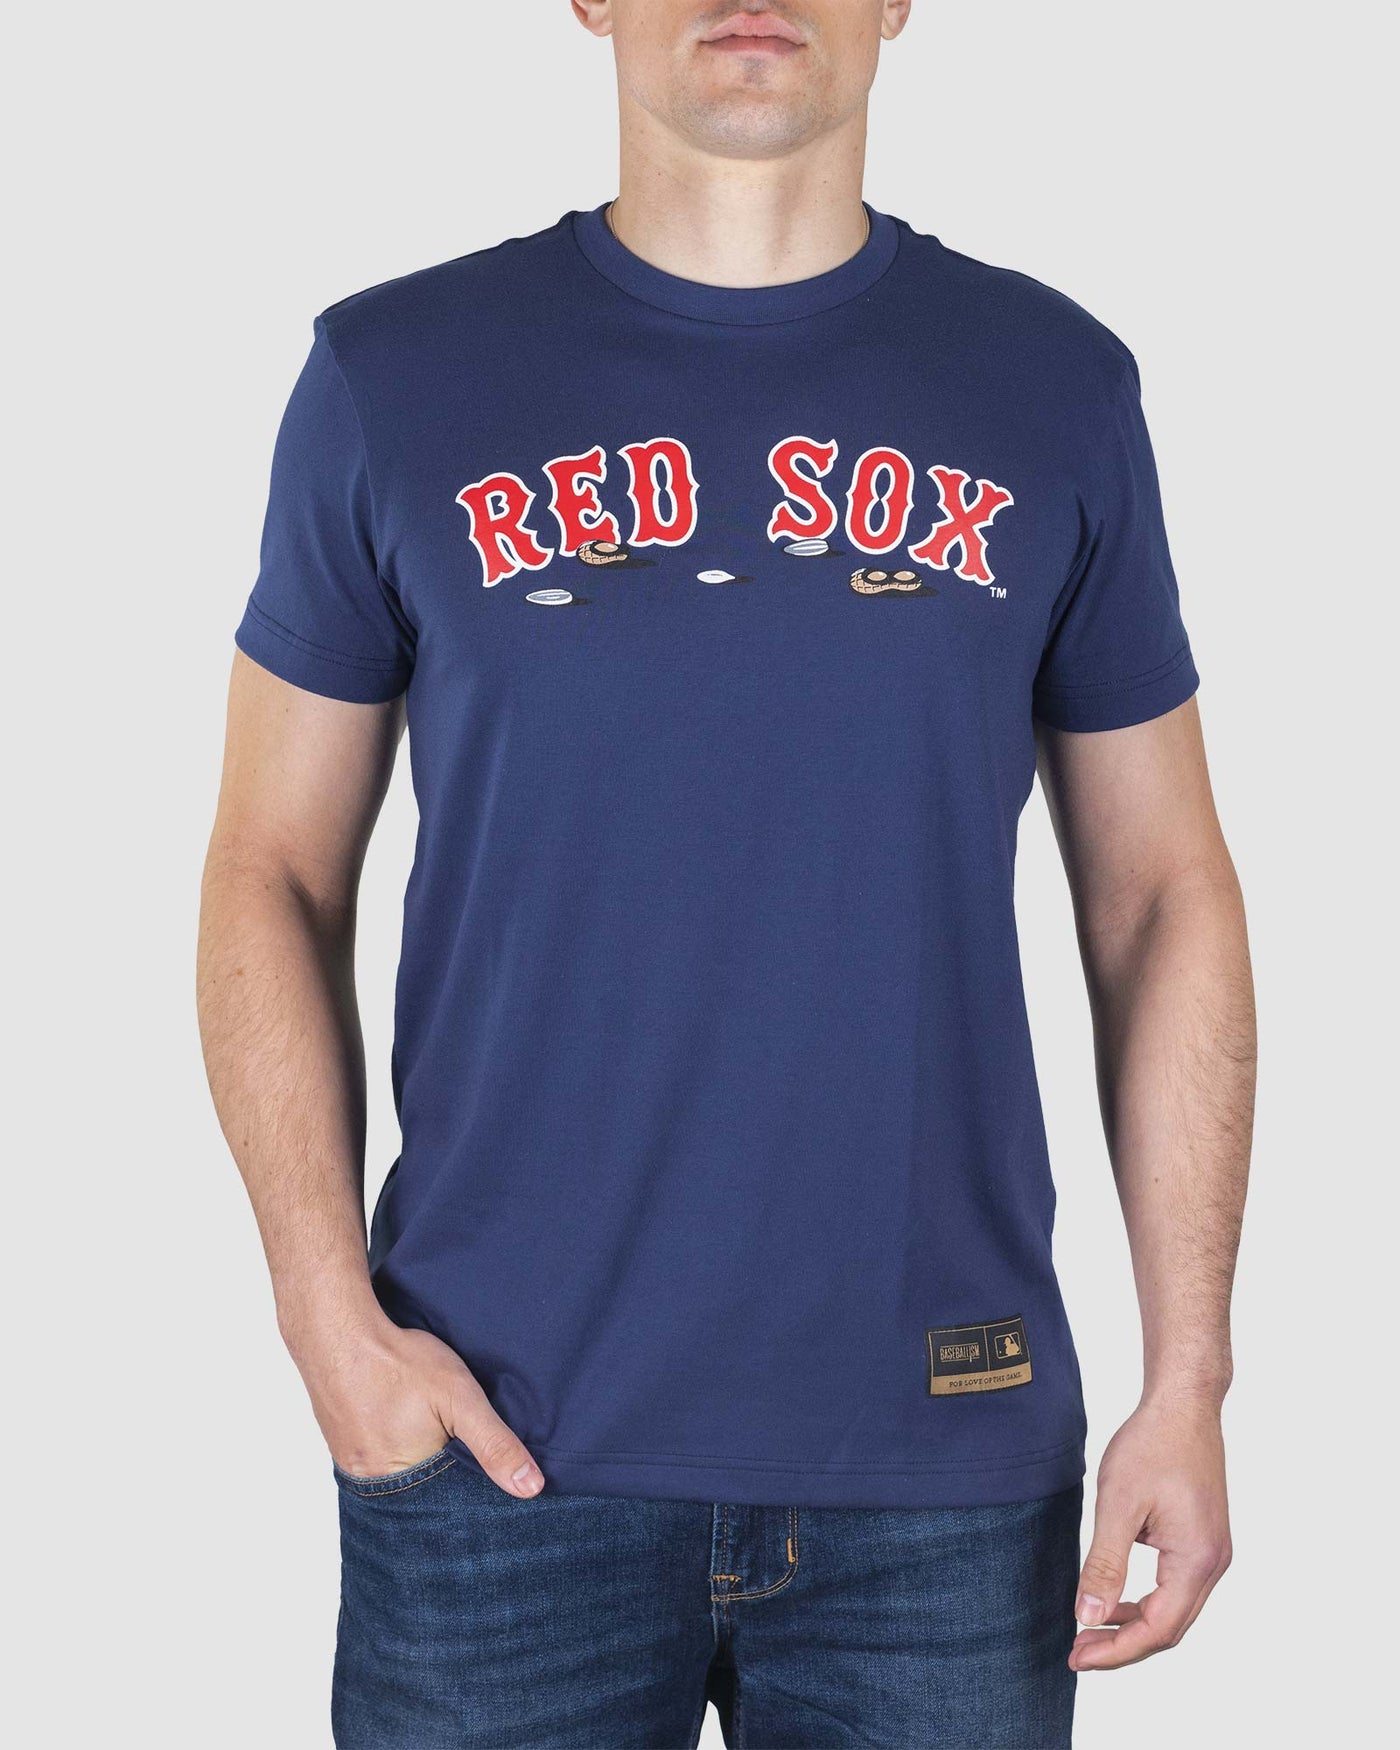 red sox baseball tee